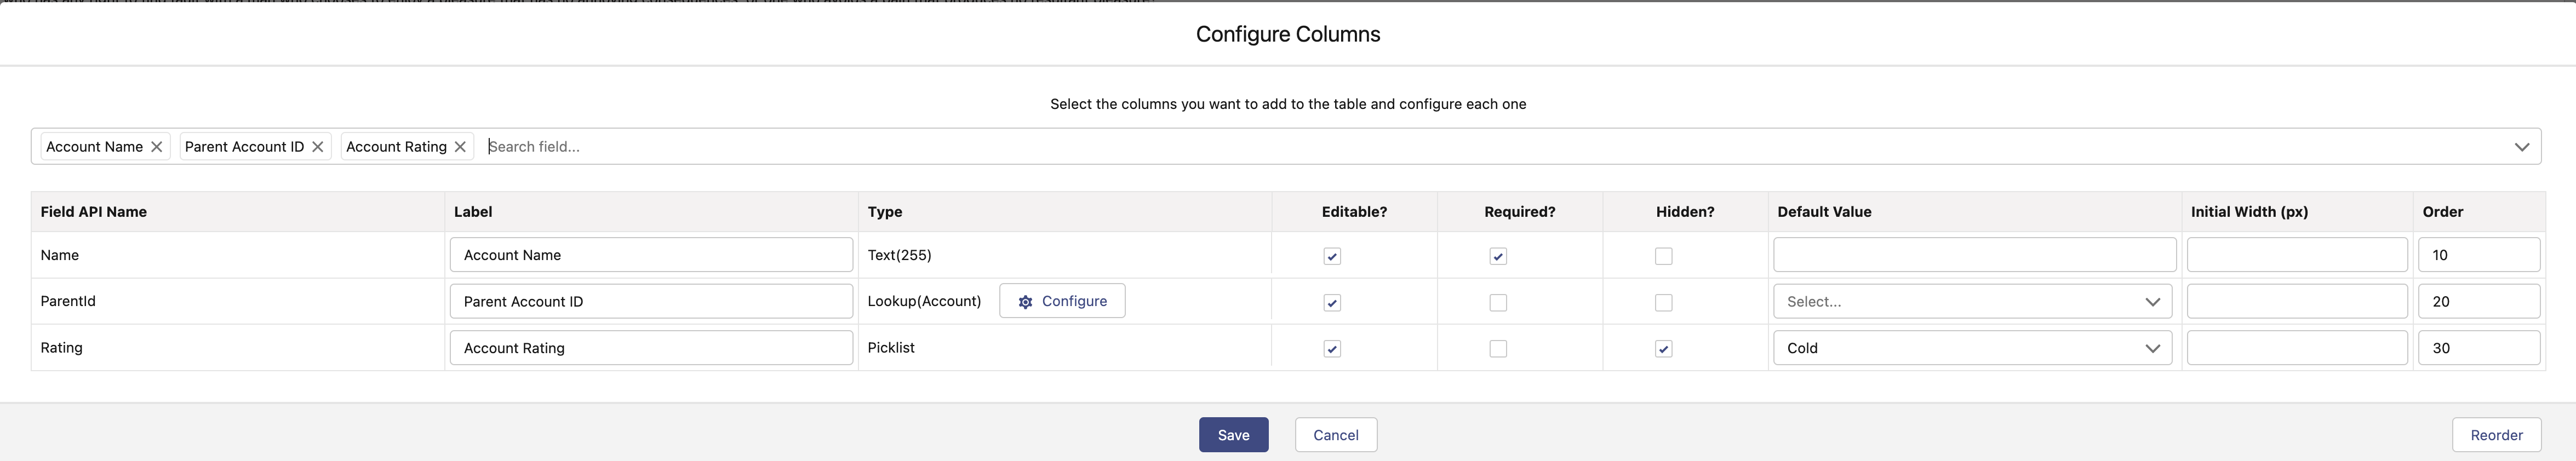 Columns Configuration